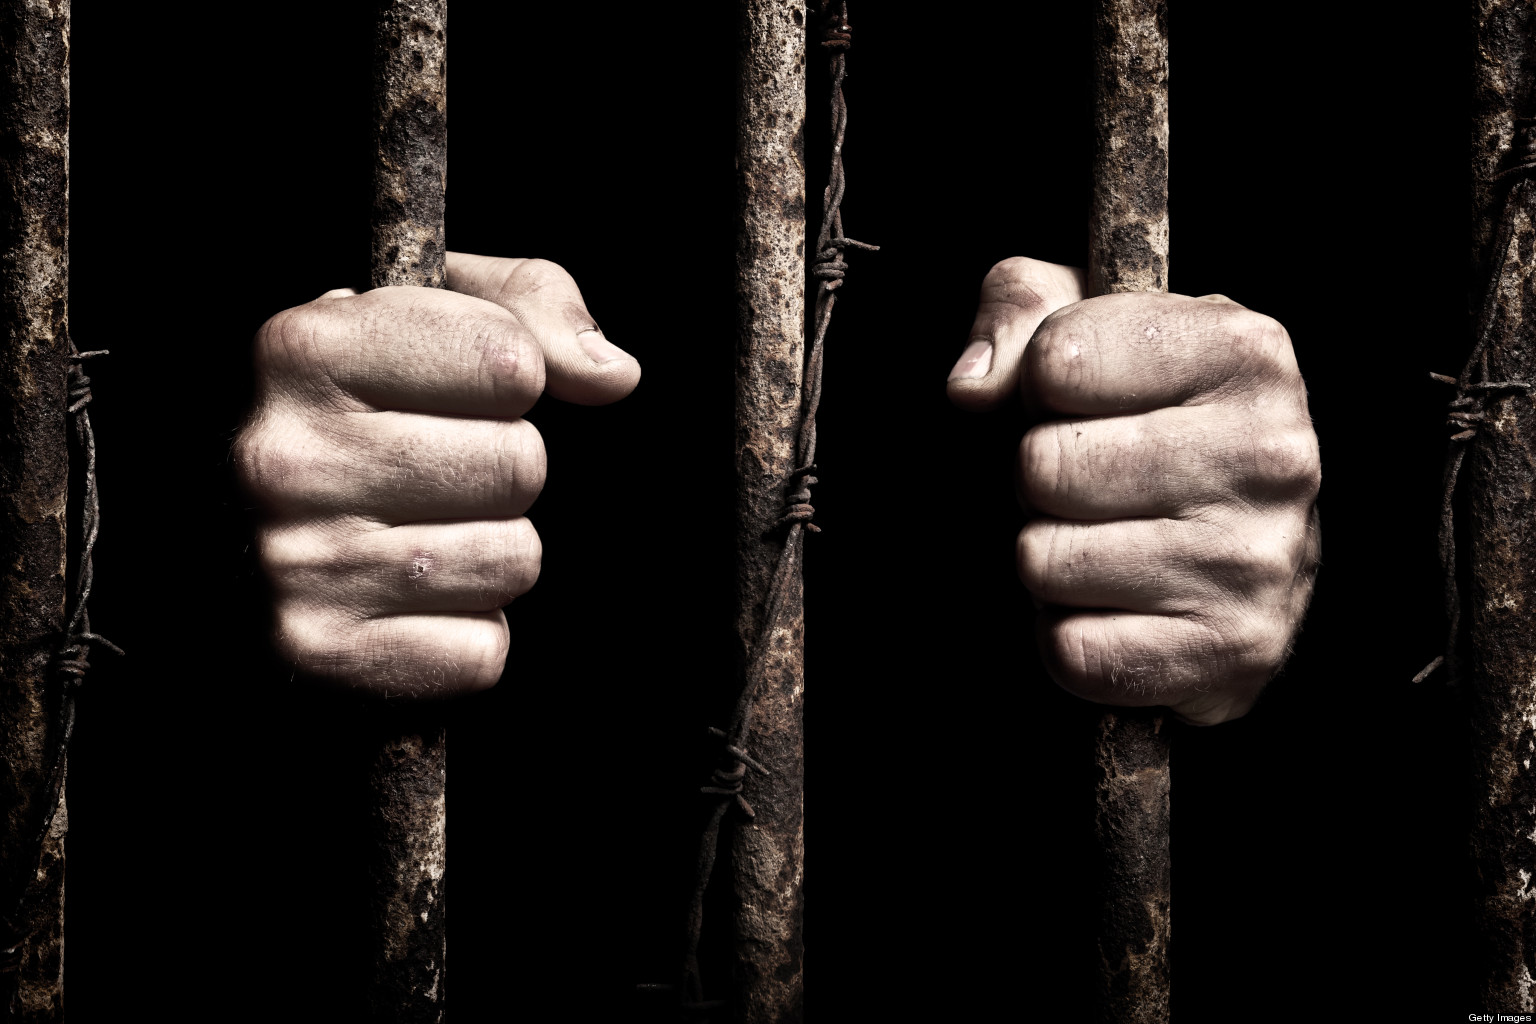 Nigerian man on death row in Singapore freed